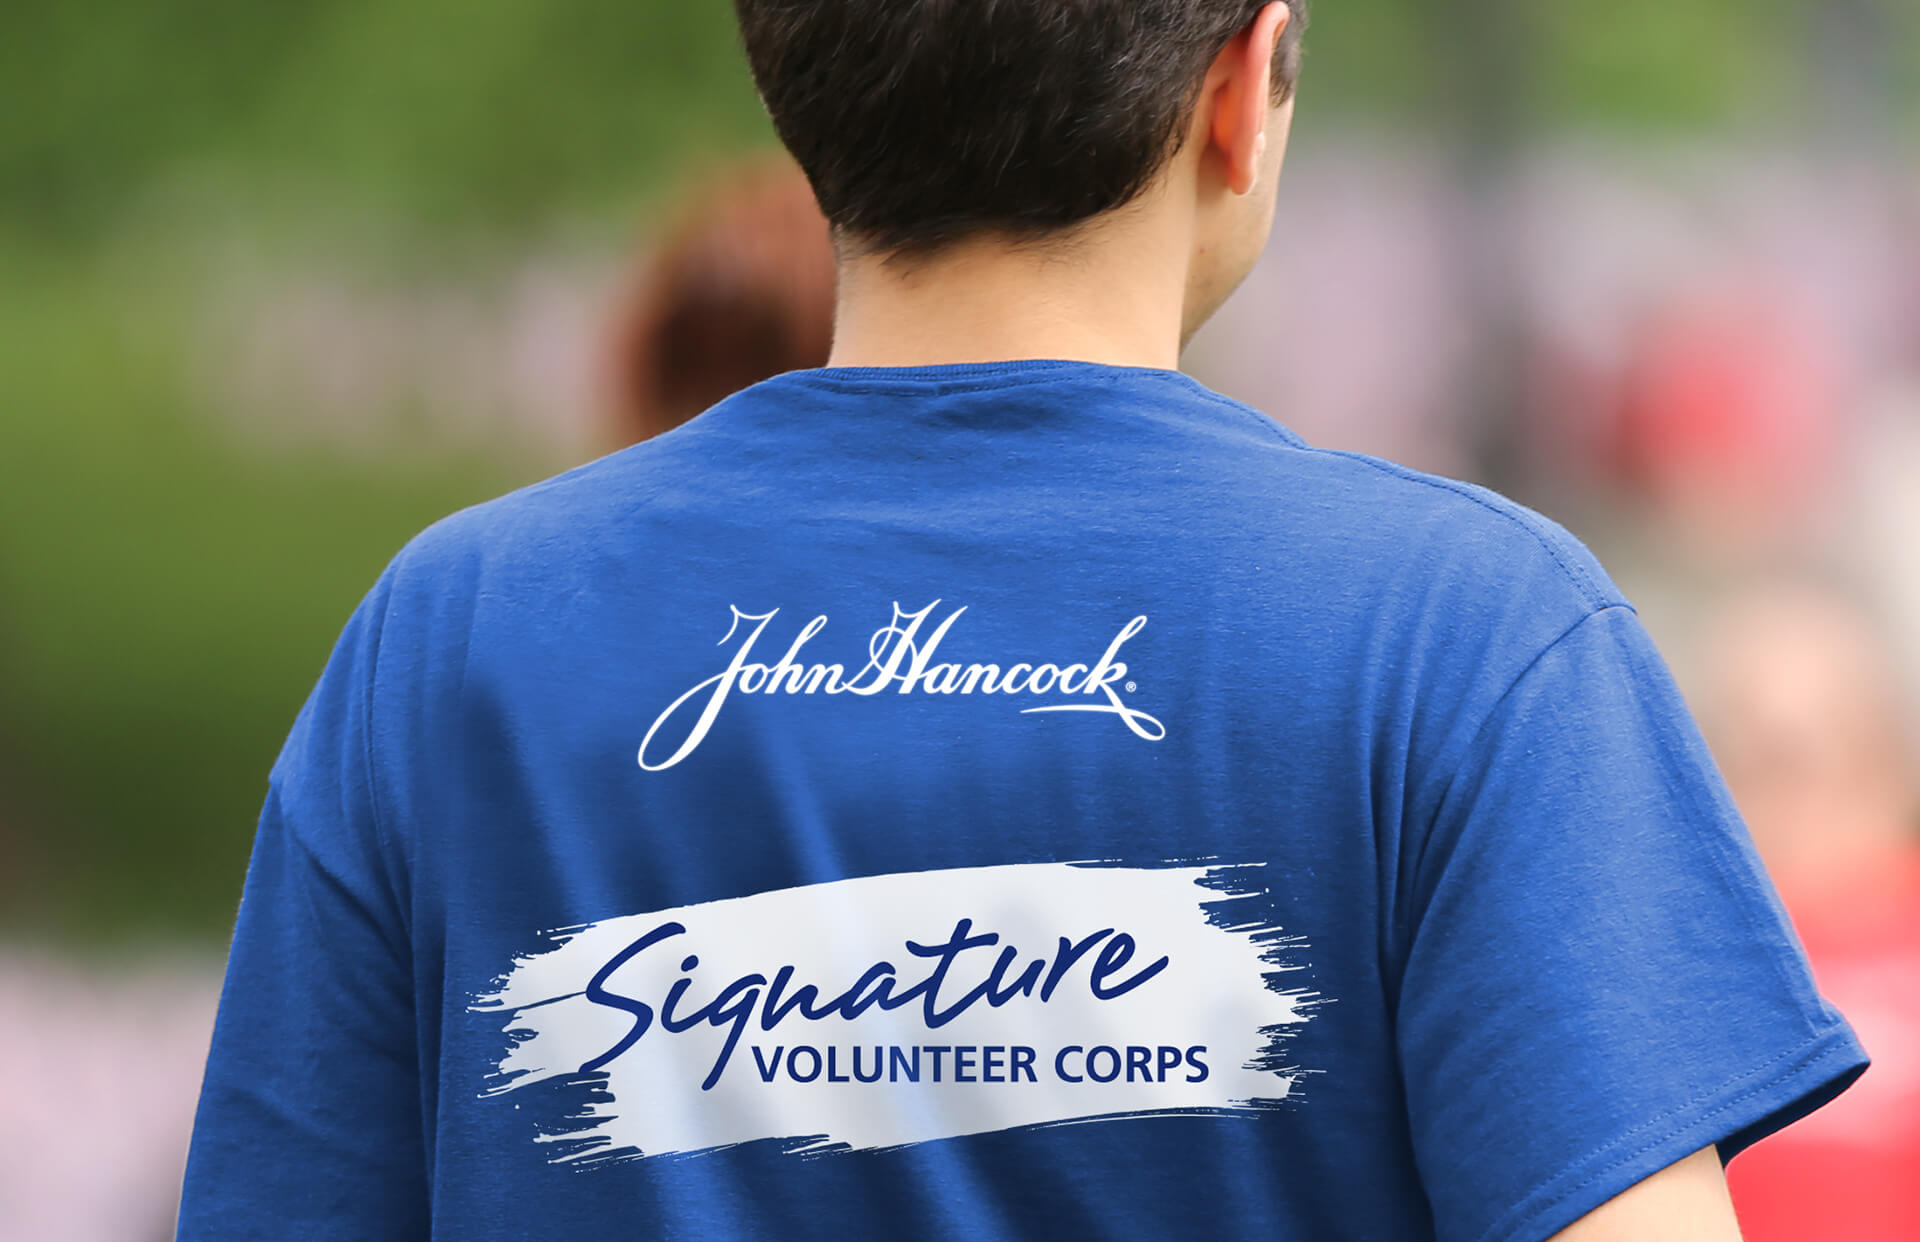 A John Hancock employee volunteer wearing a blue "Signature Volunteer Corps" t-shirt